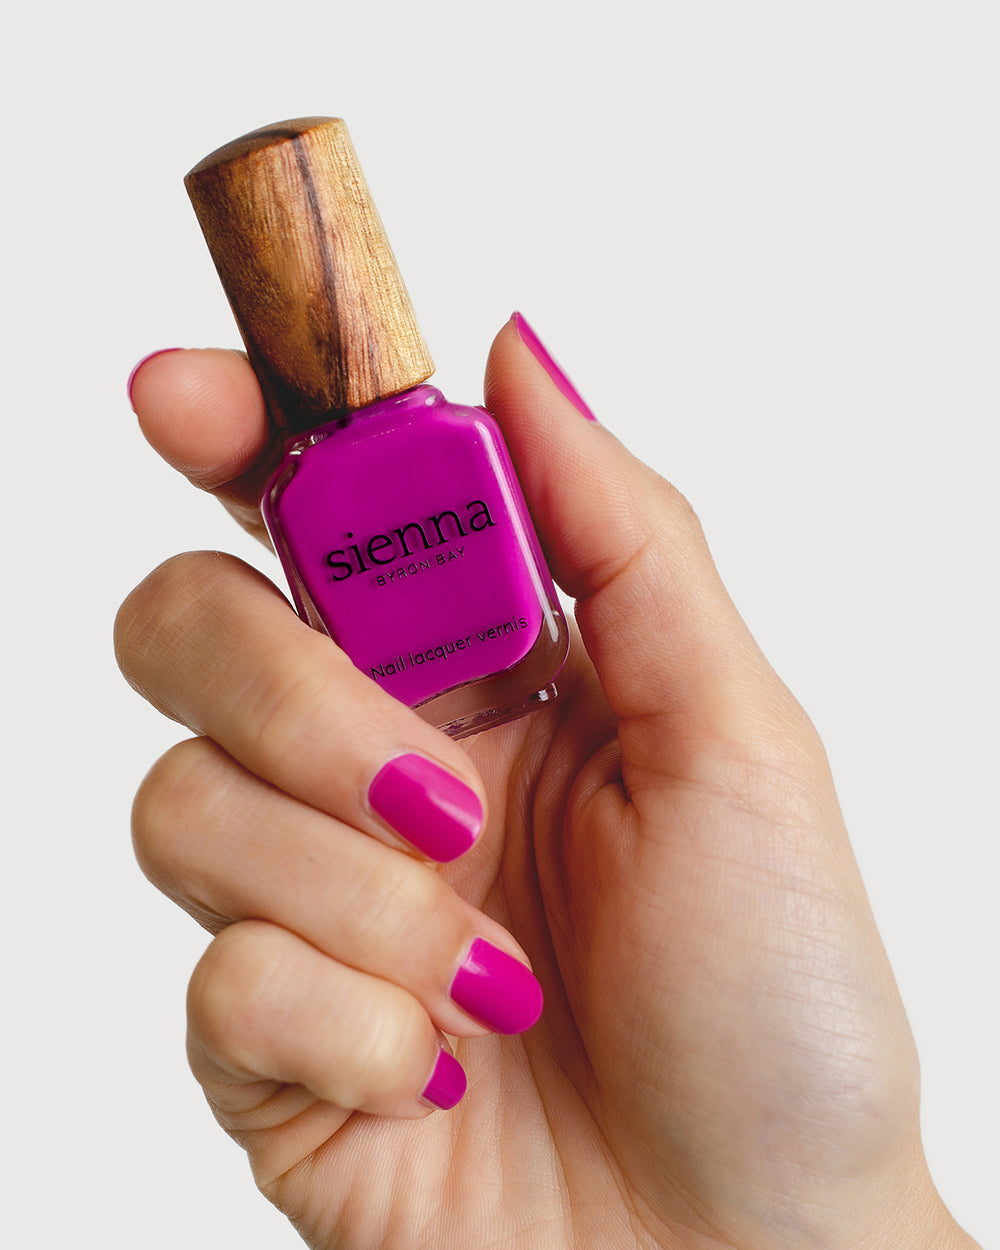 Bright magenta nail polish hand swatch on fair skin tone holding sienna bottle close-up